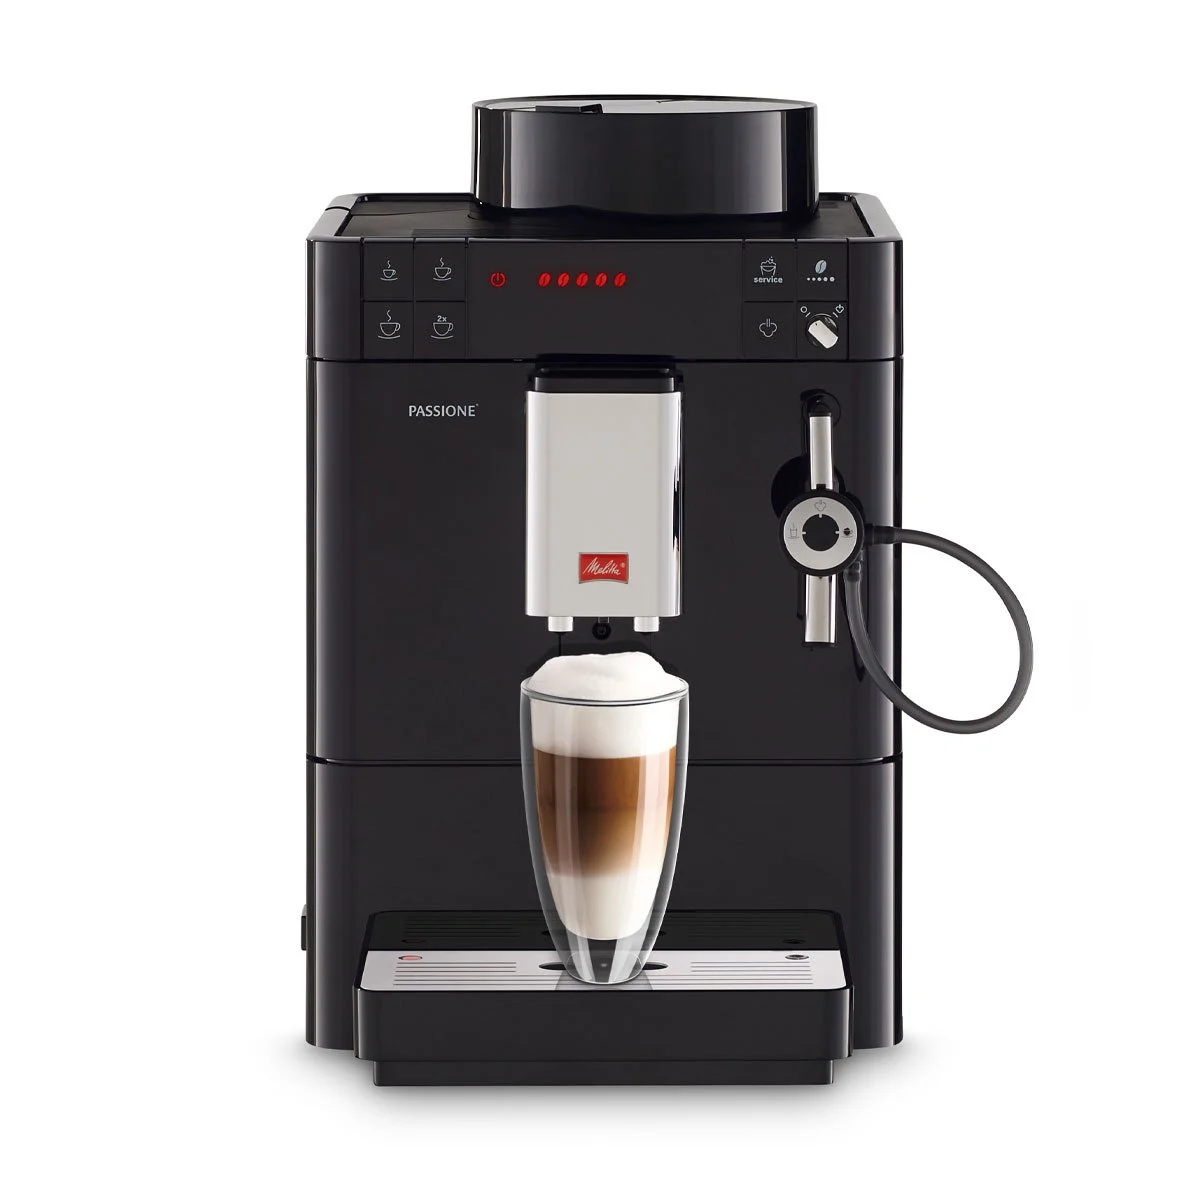 Melitta Caffeo Passione Tam Otomatik Kahve Makinesi Siyah ürün görseli